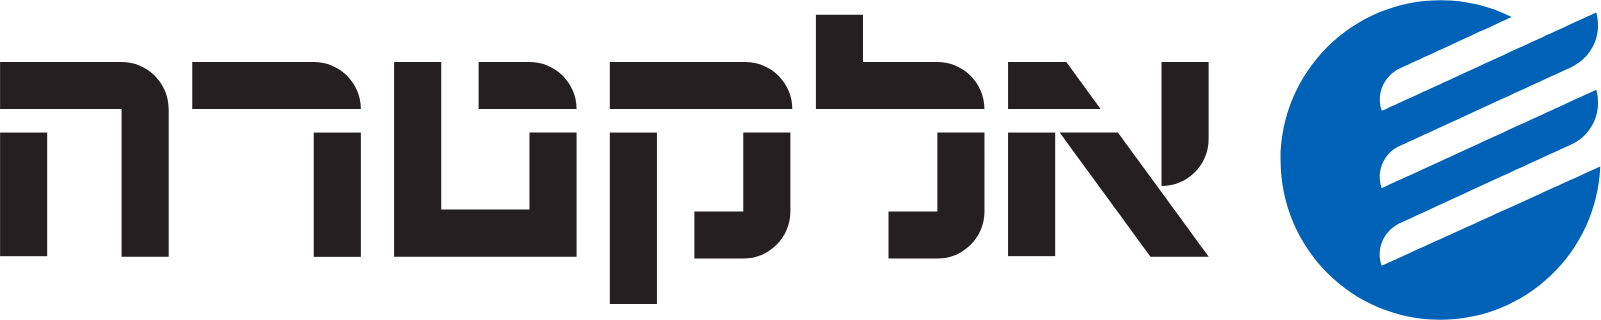 Electra
 logo large (transparent PNG)